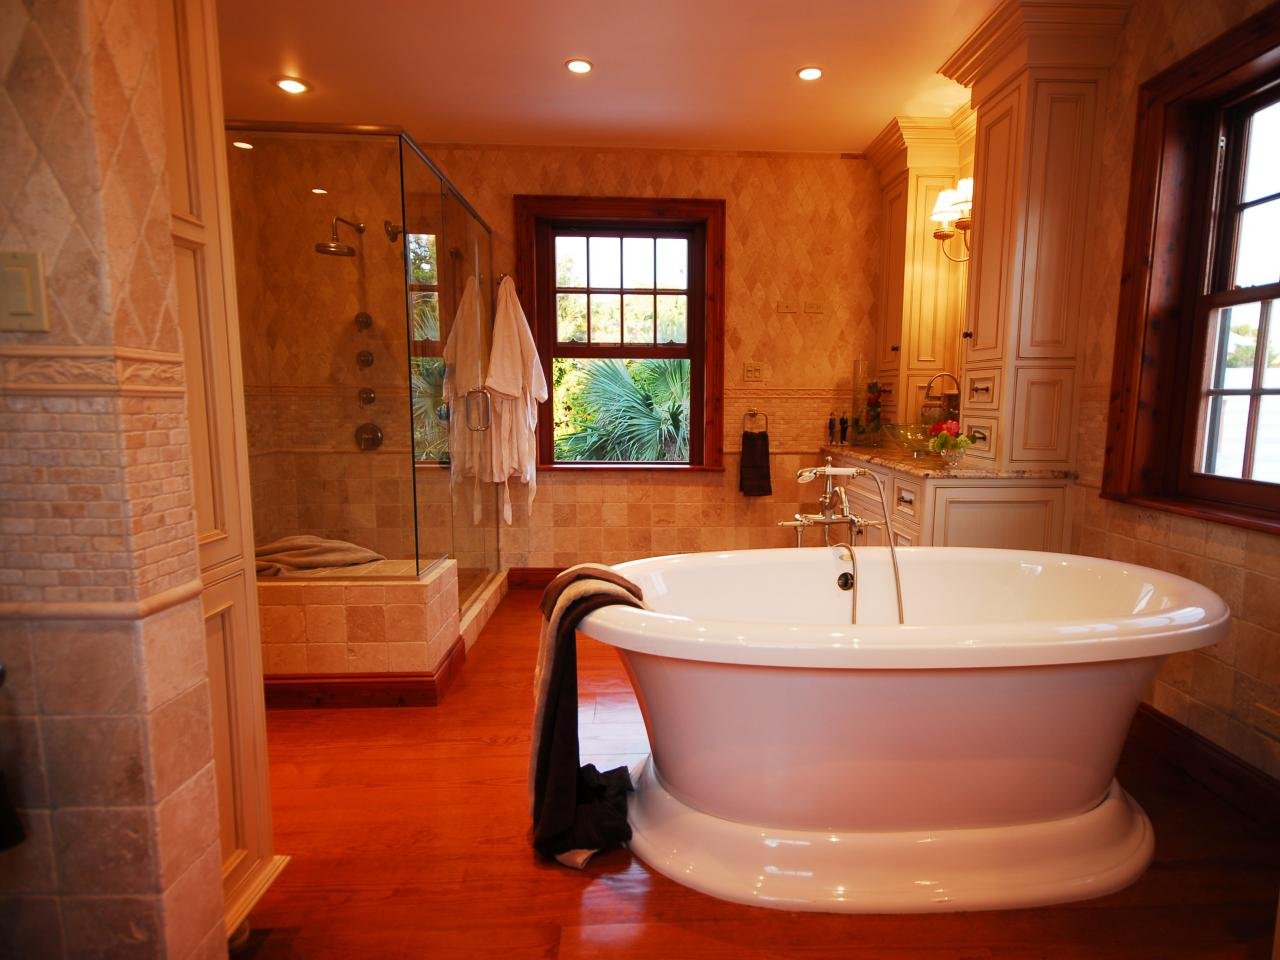 Ванная комната шире ванны. Ванная комната. Шикарная ванная комната. Красивые Ванные комнаты. Большая ванная комната в частном доме.